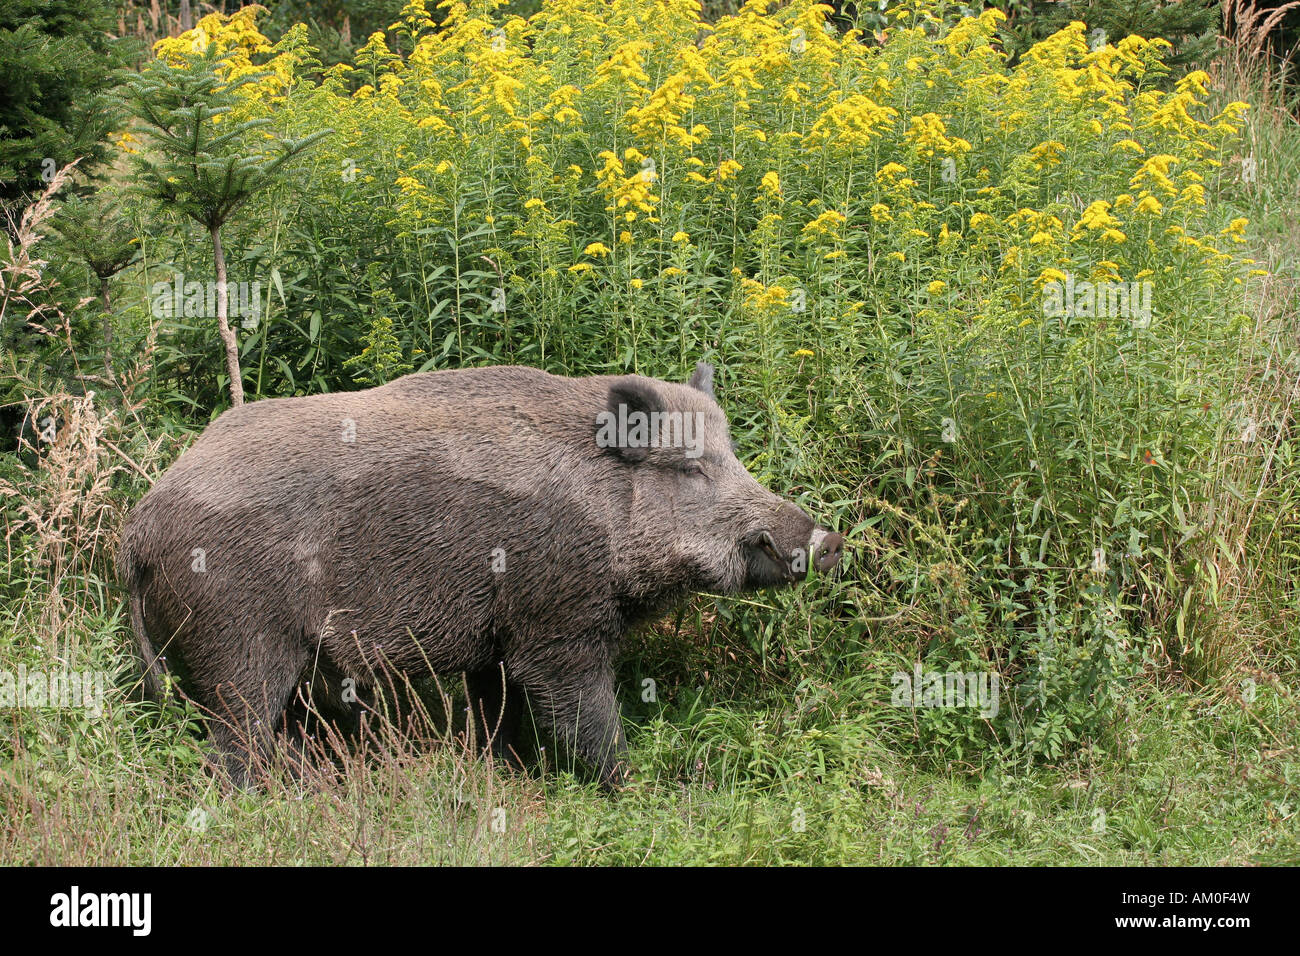 Adult tusker, Sus scrofa, in front of a goldenrod bush, Solidago virgaurea Stock Photo